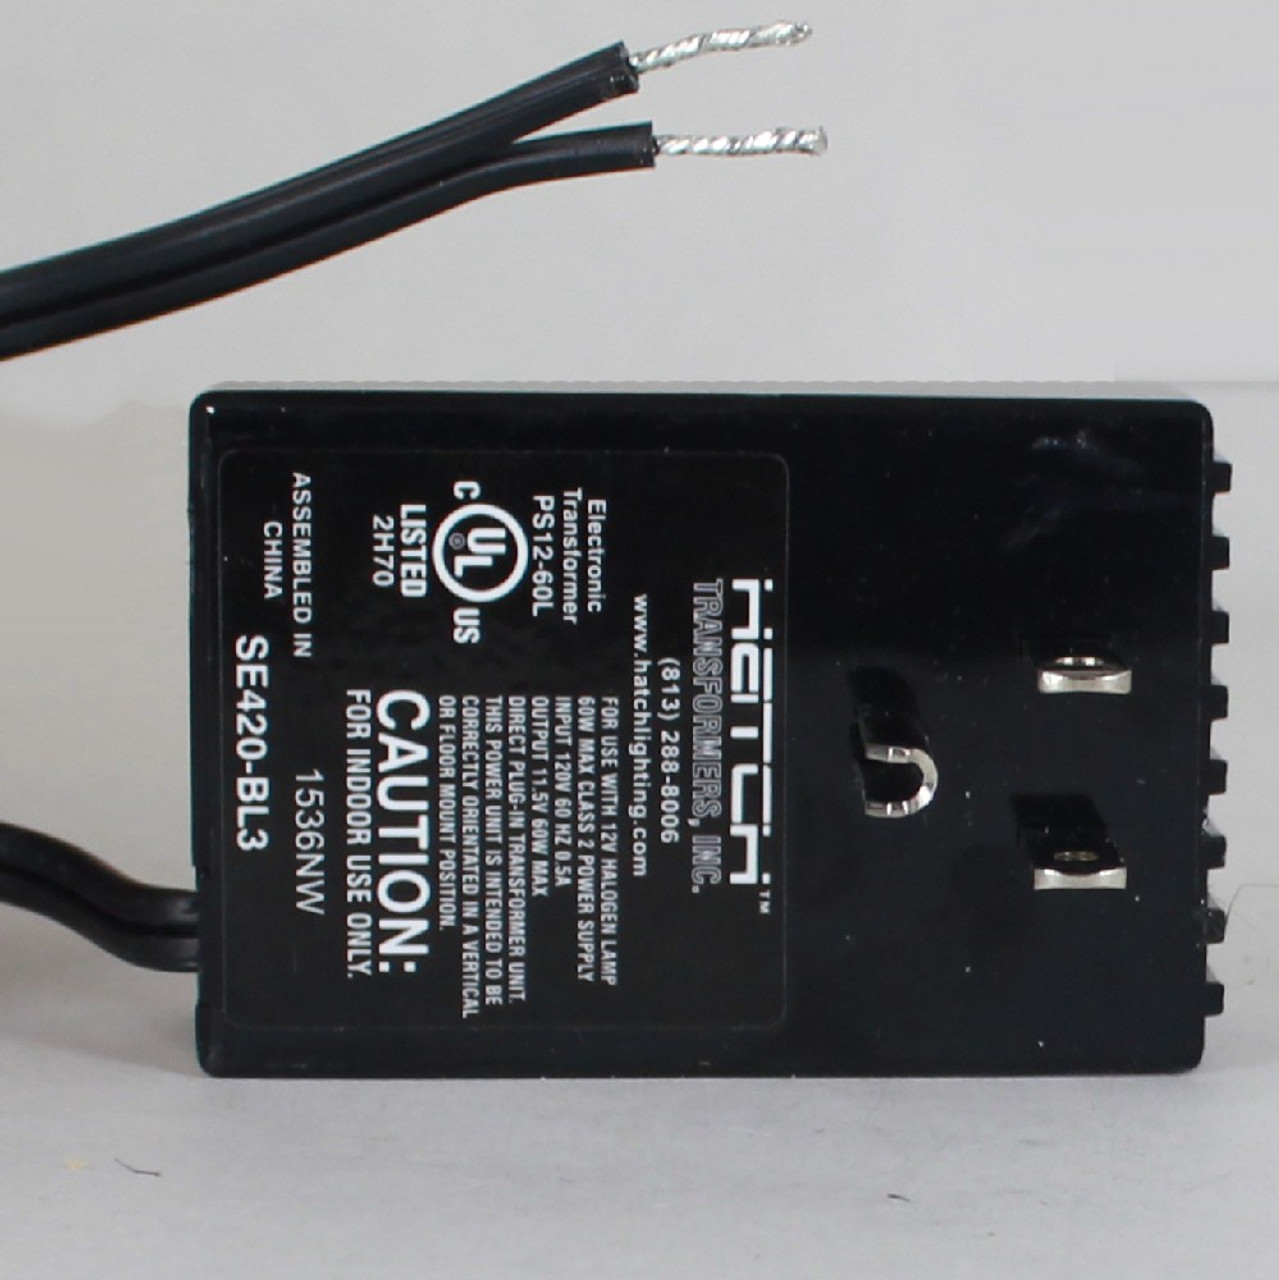 Hatch 60W 12V Output Circuit Electronic Low Voltage Transformer - Black